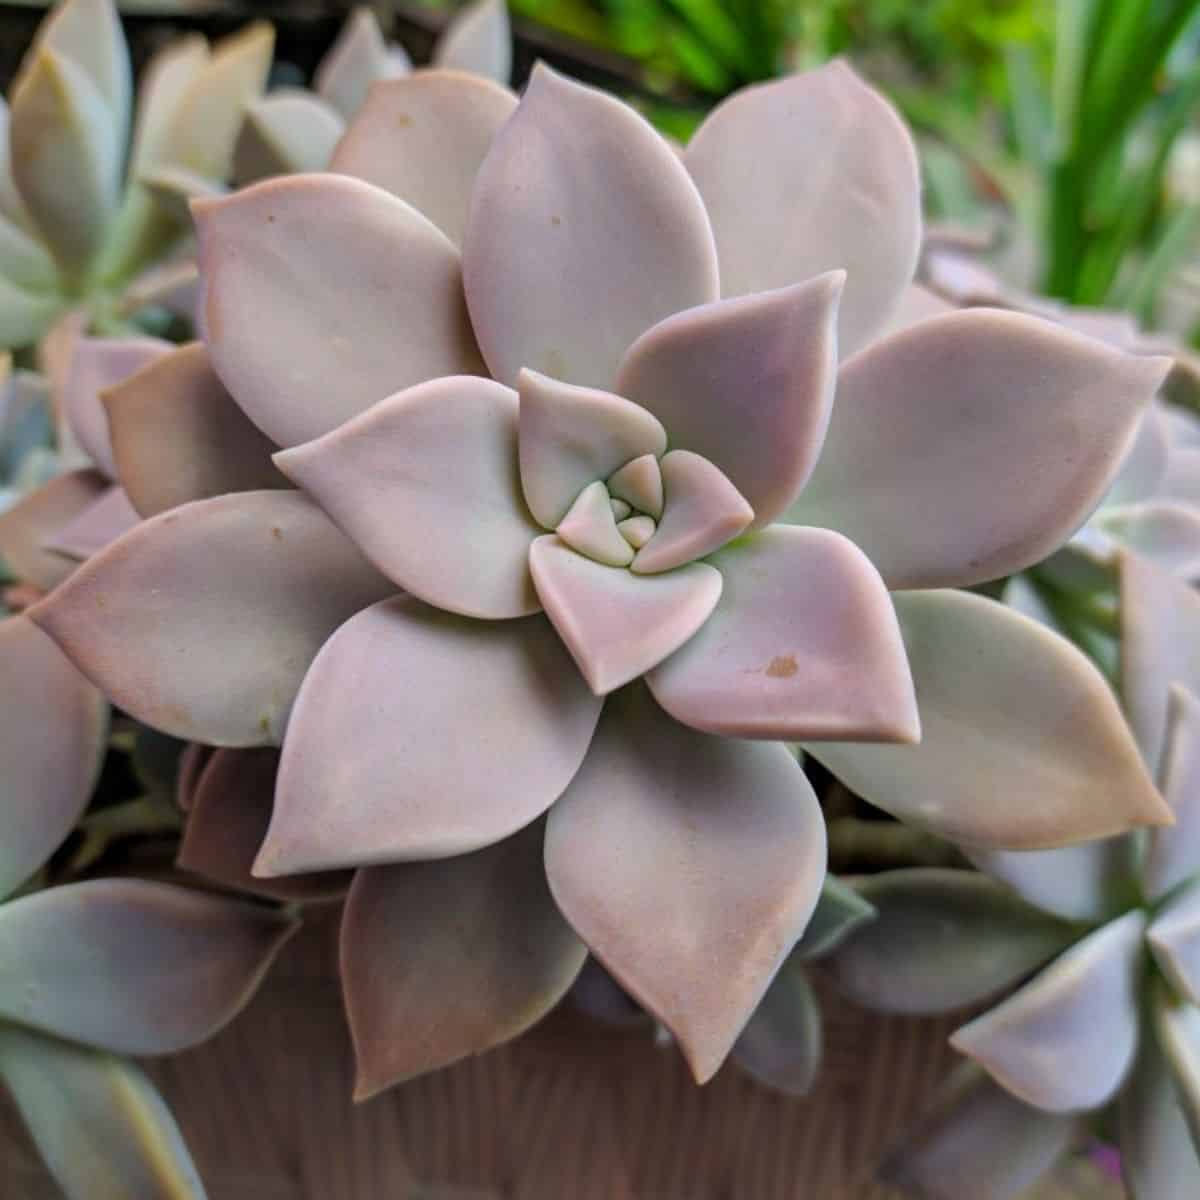 Graptopetalum paraguayense ‘Ghost Plant’ close-up.